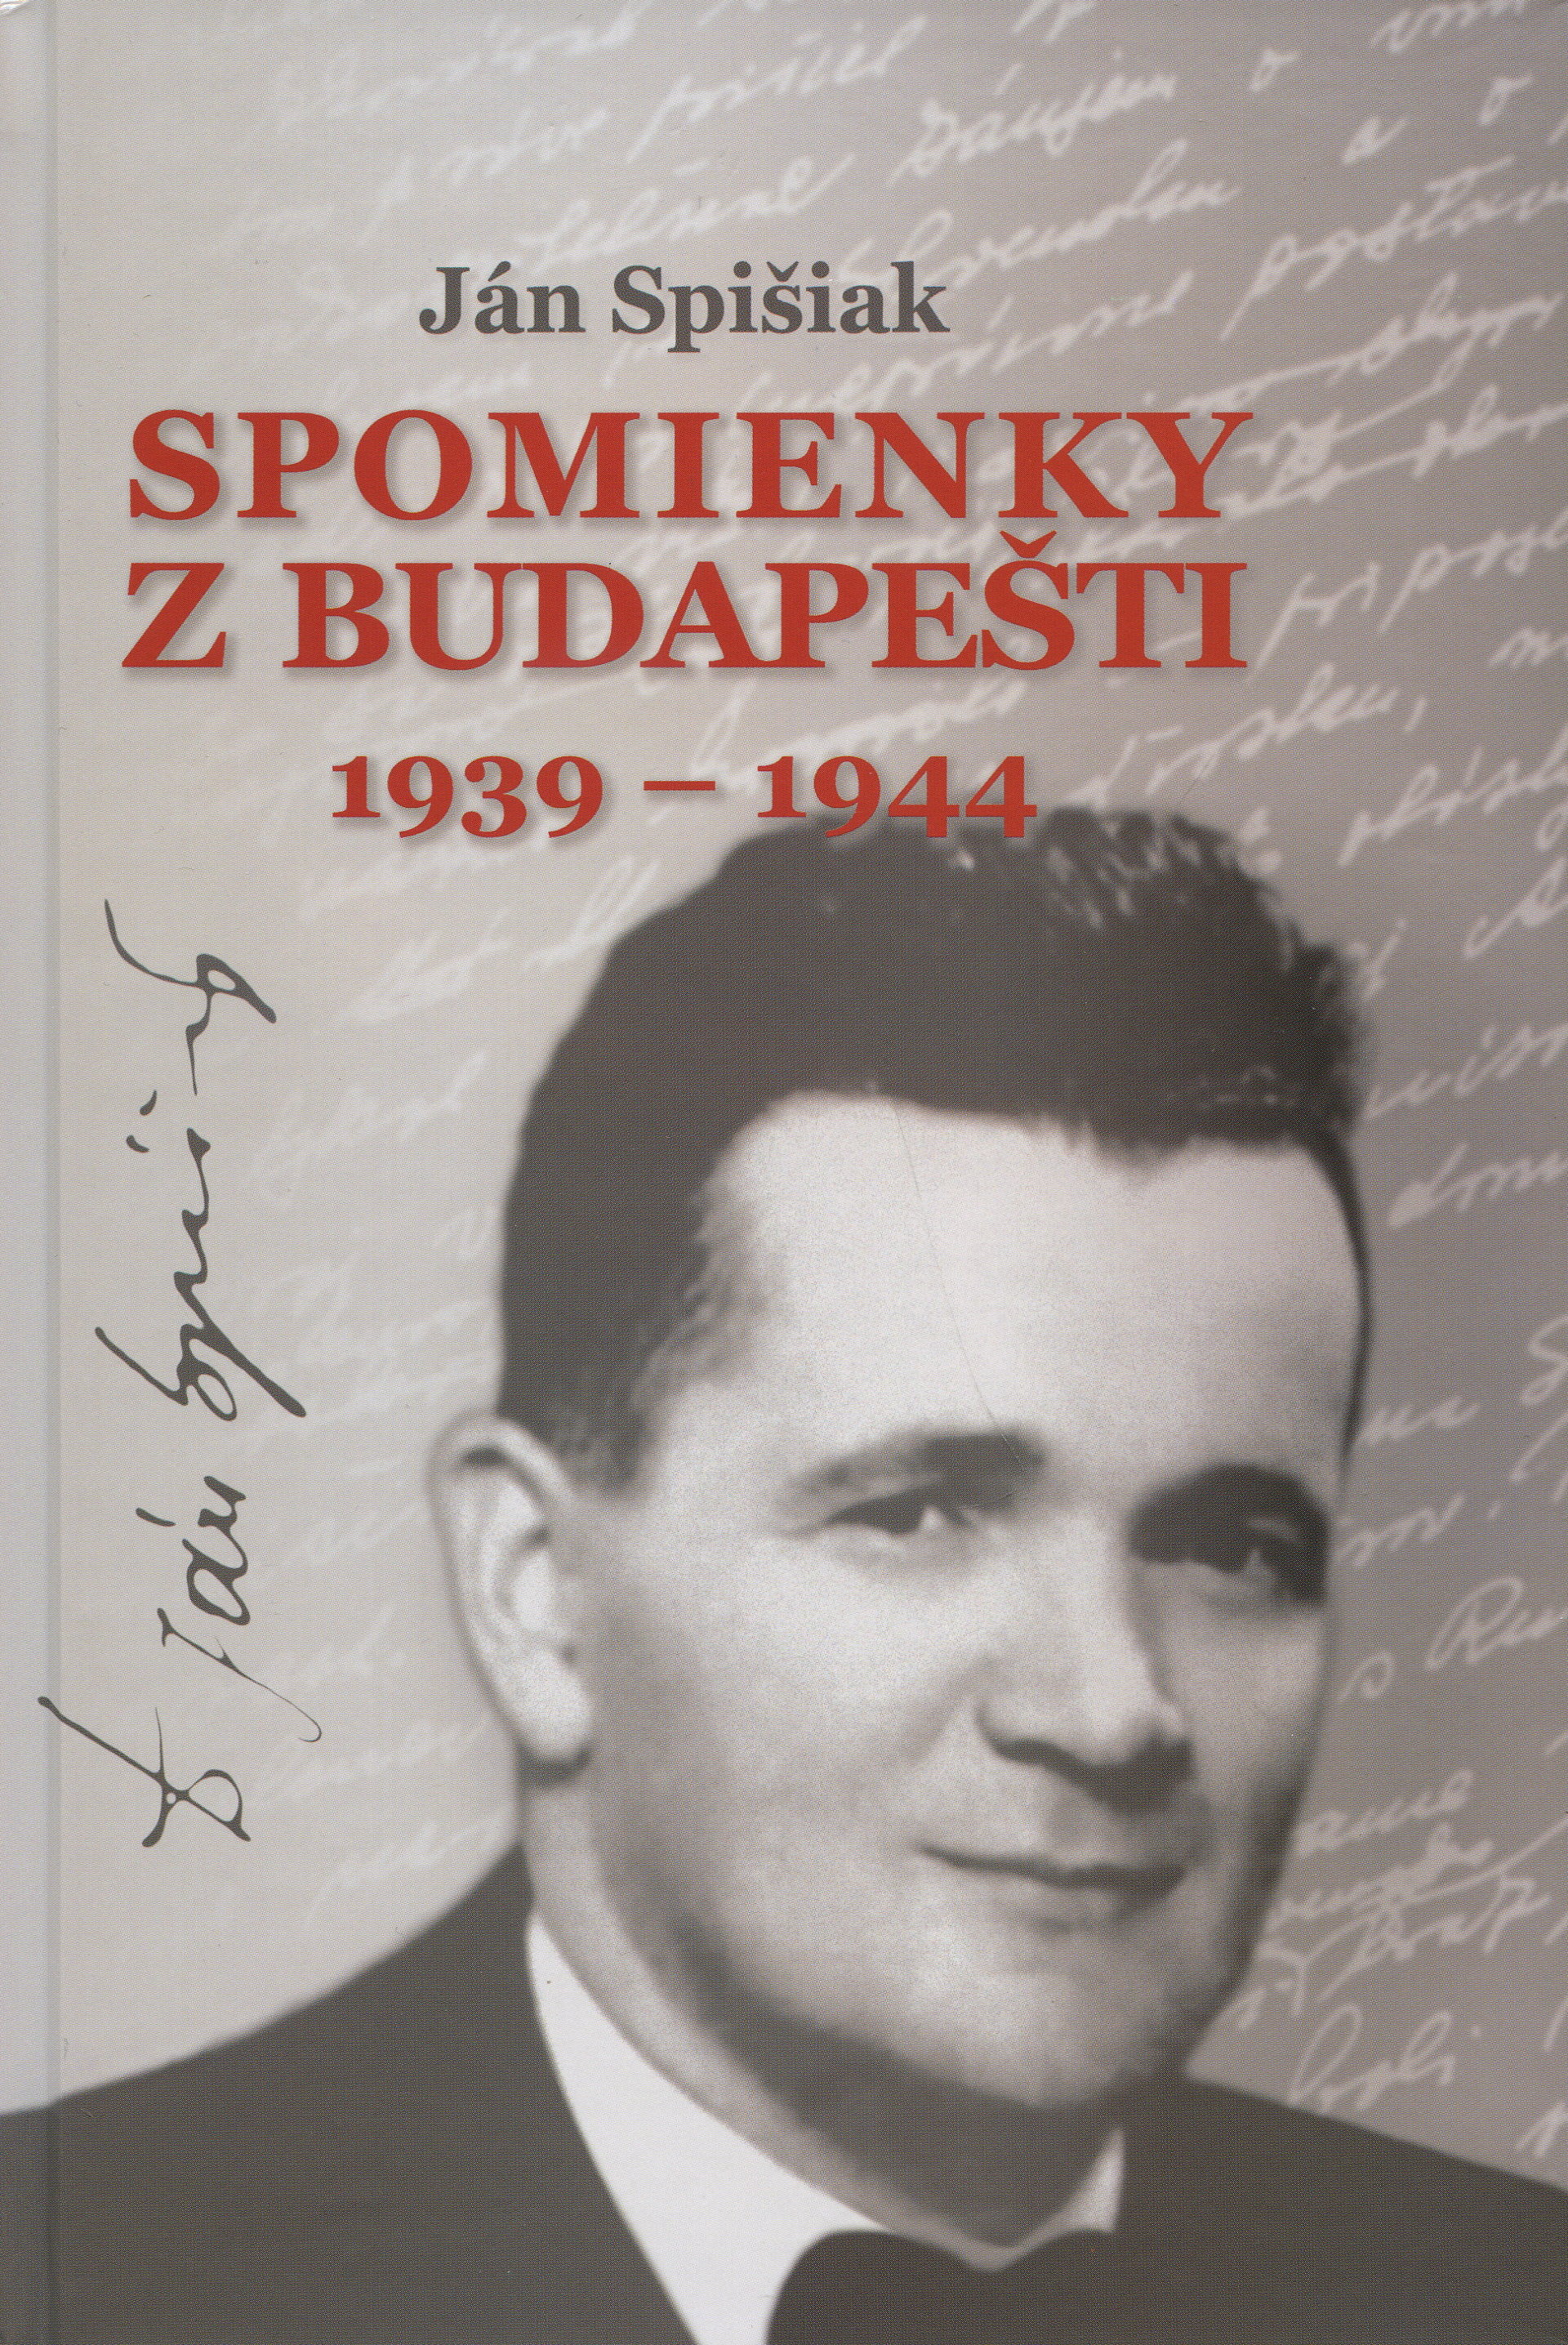 Spomienky z budapešti 1939 - 1944